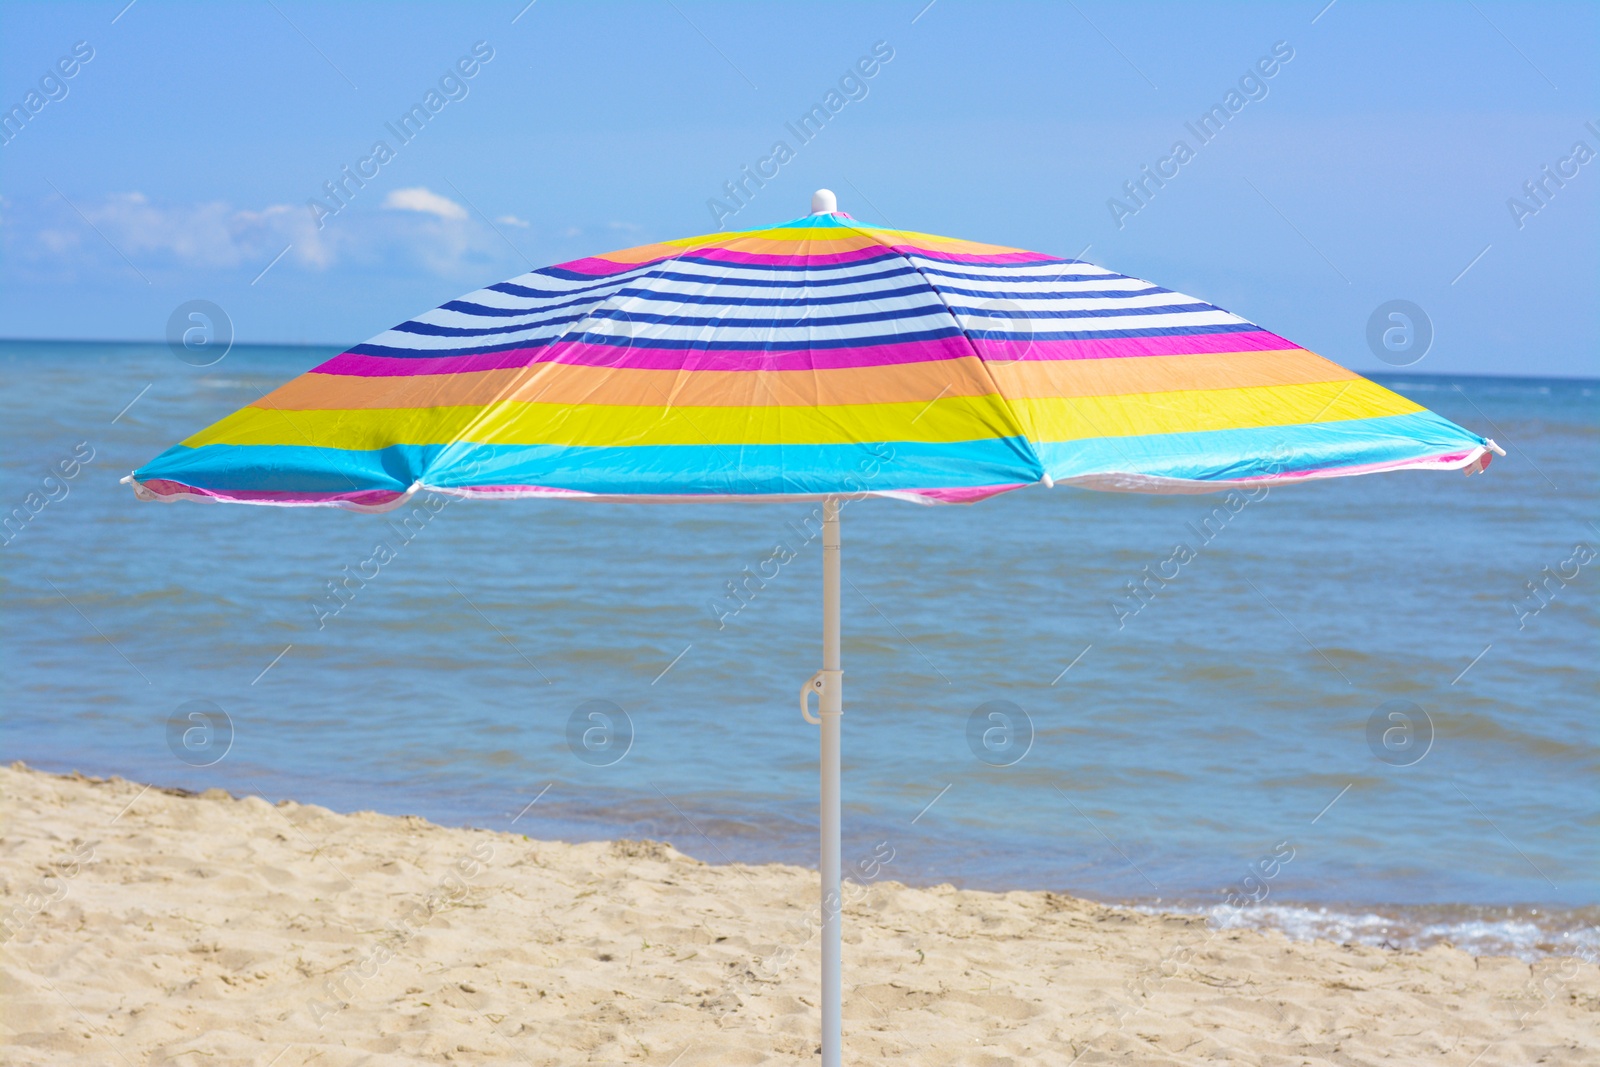 Photo of Colorful striped umbrella on beach near sea